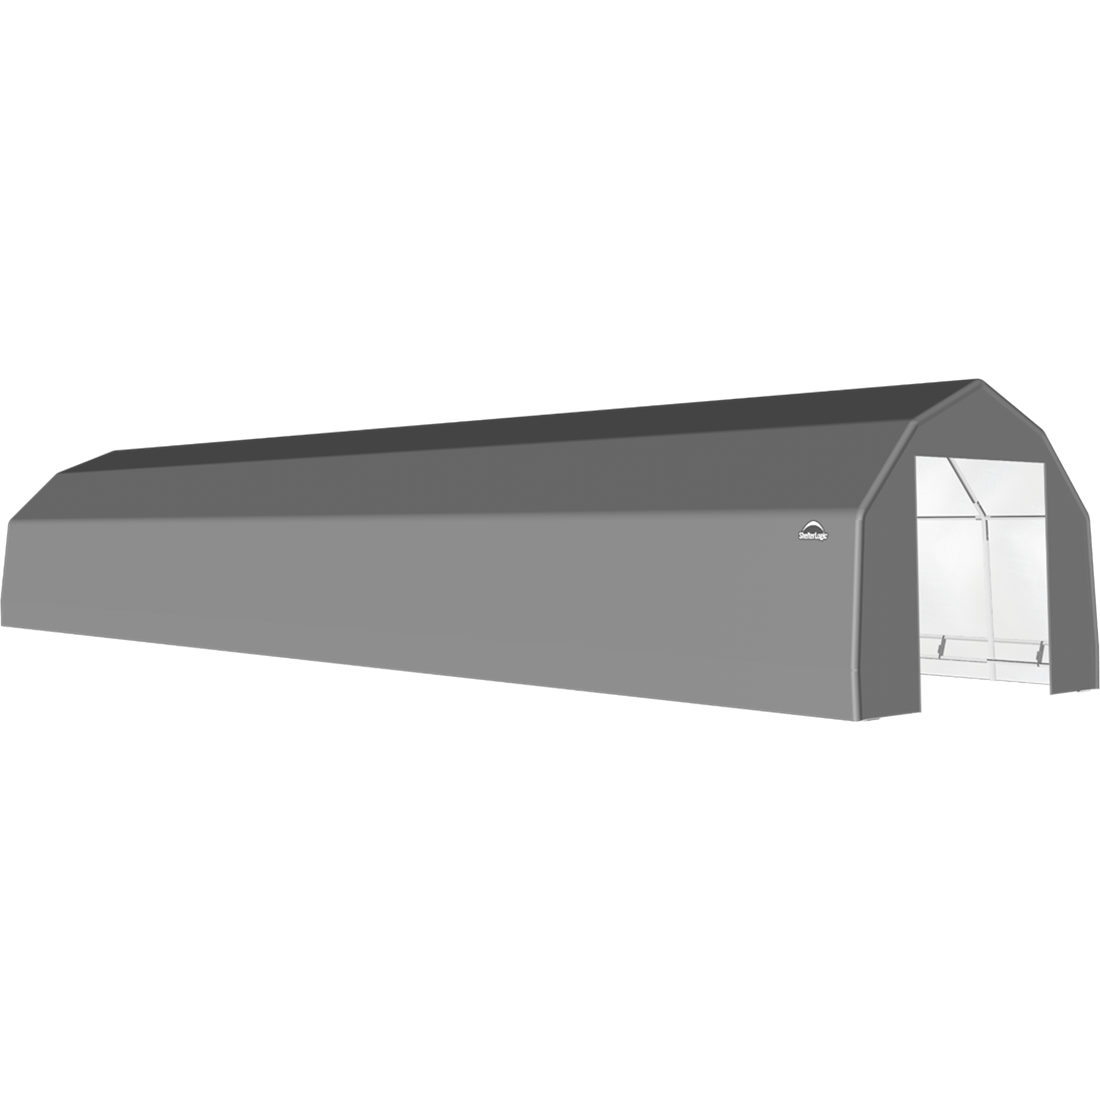 ShelterTech SP Series Barn Shelter, 15 ft. x 60 ft. x 11 ft. Heavy Duty PVC 14.5 oz. Gray